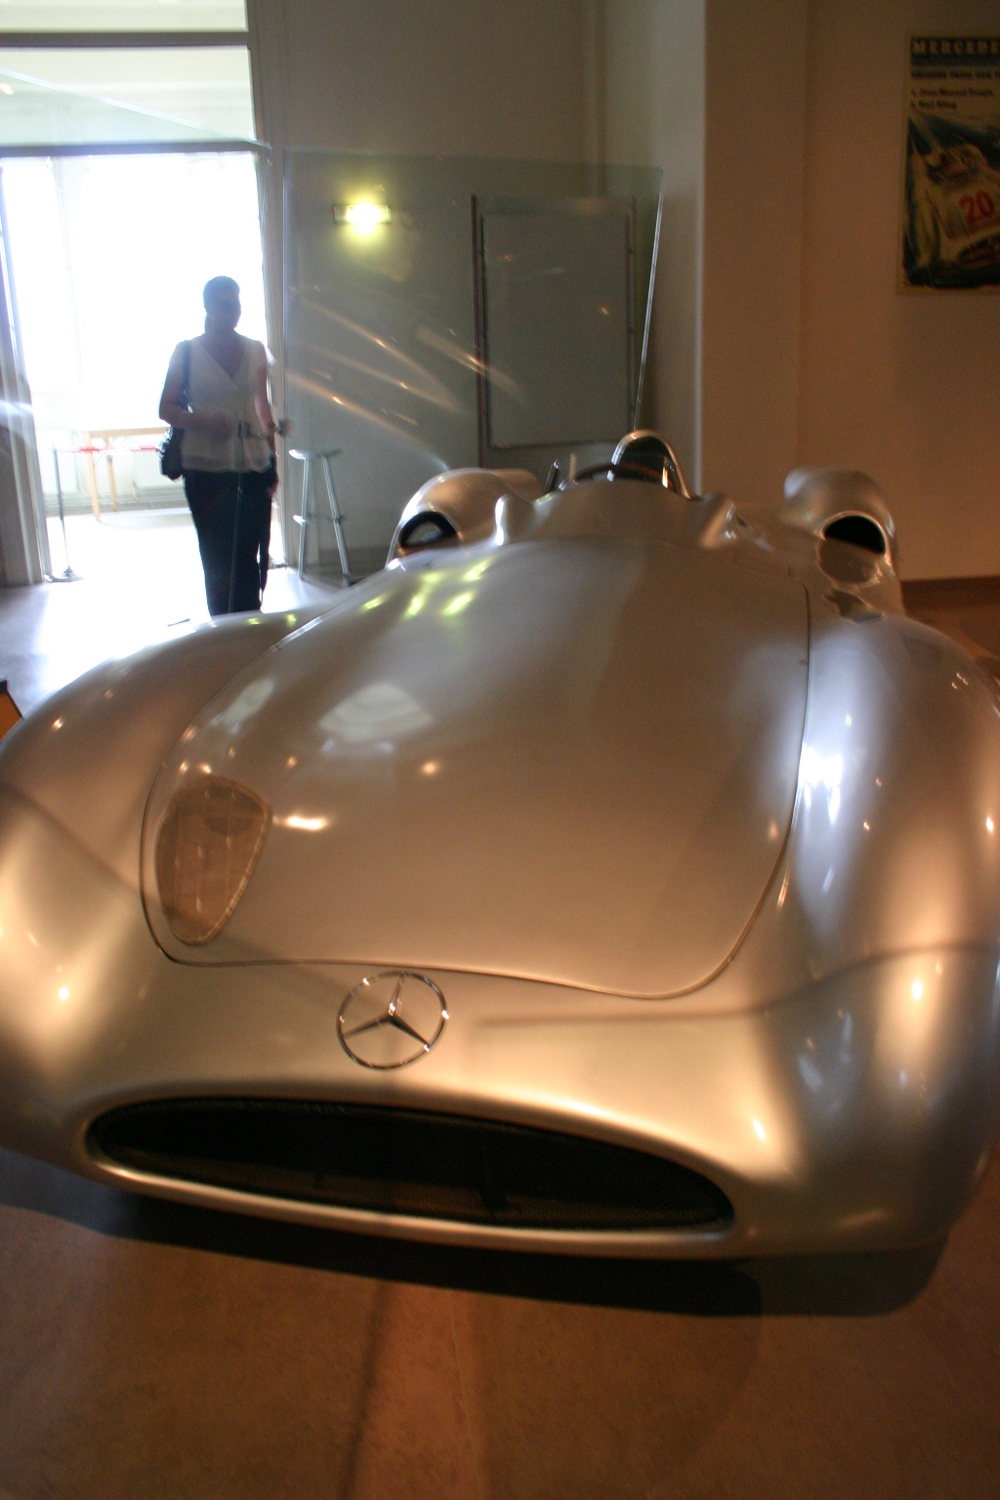 Mercedes W 196